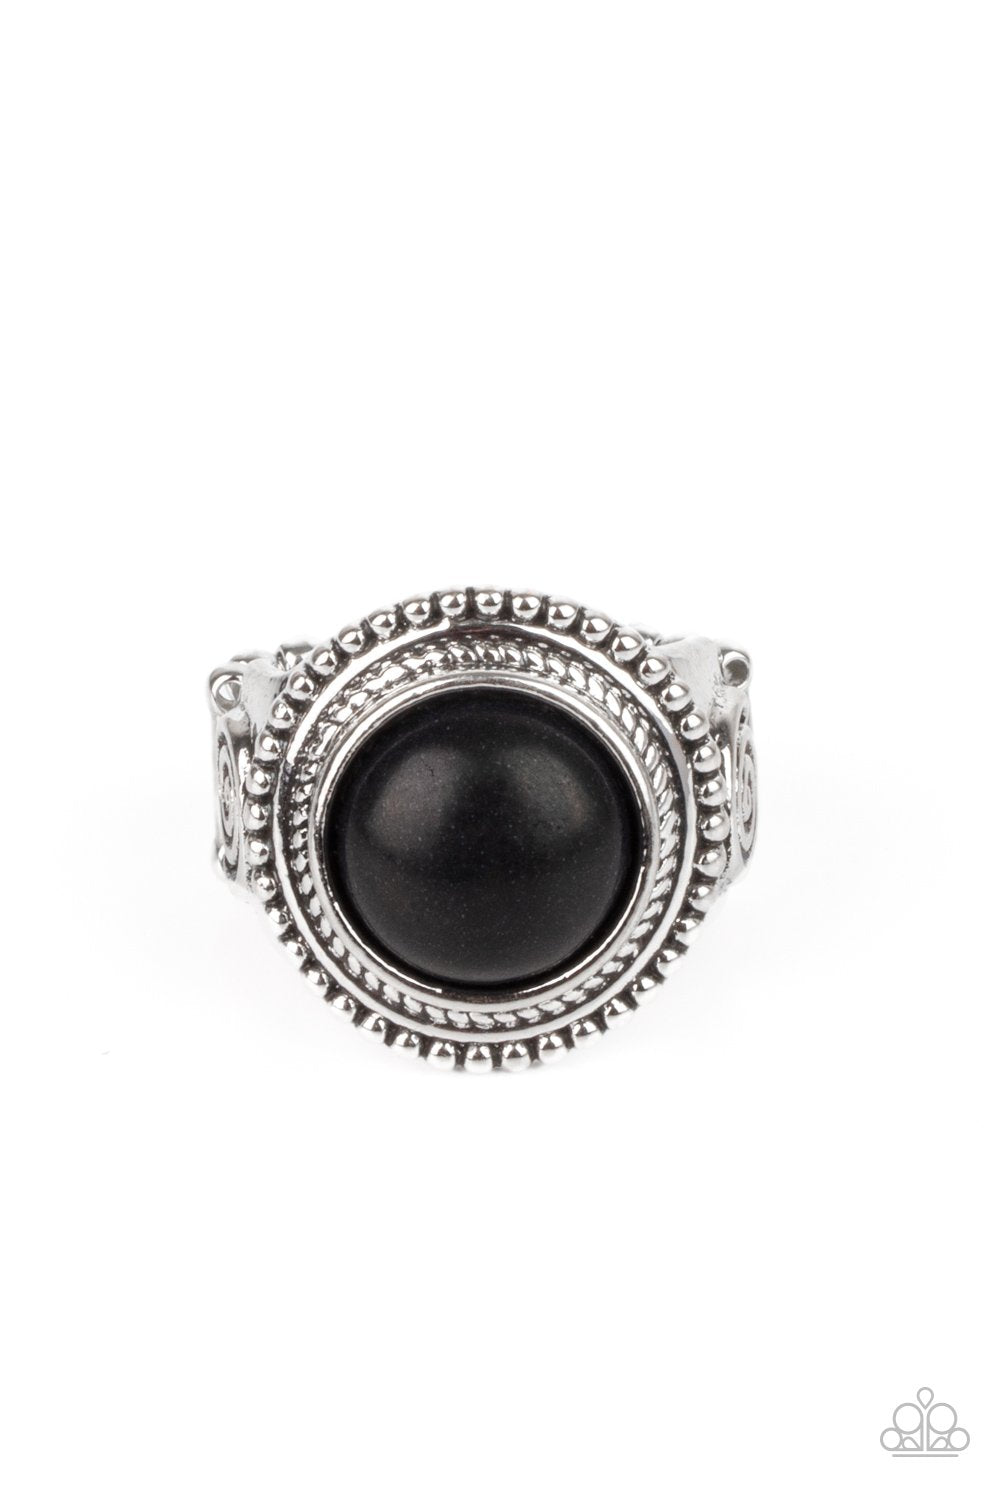 Evolutionary Essence Black Stone Ring - Paparazzi Accessories- lightbox - CarasShop.com - $5 Jewelry by Cara Jewels